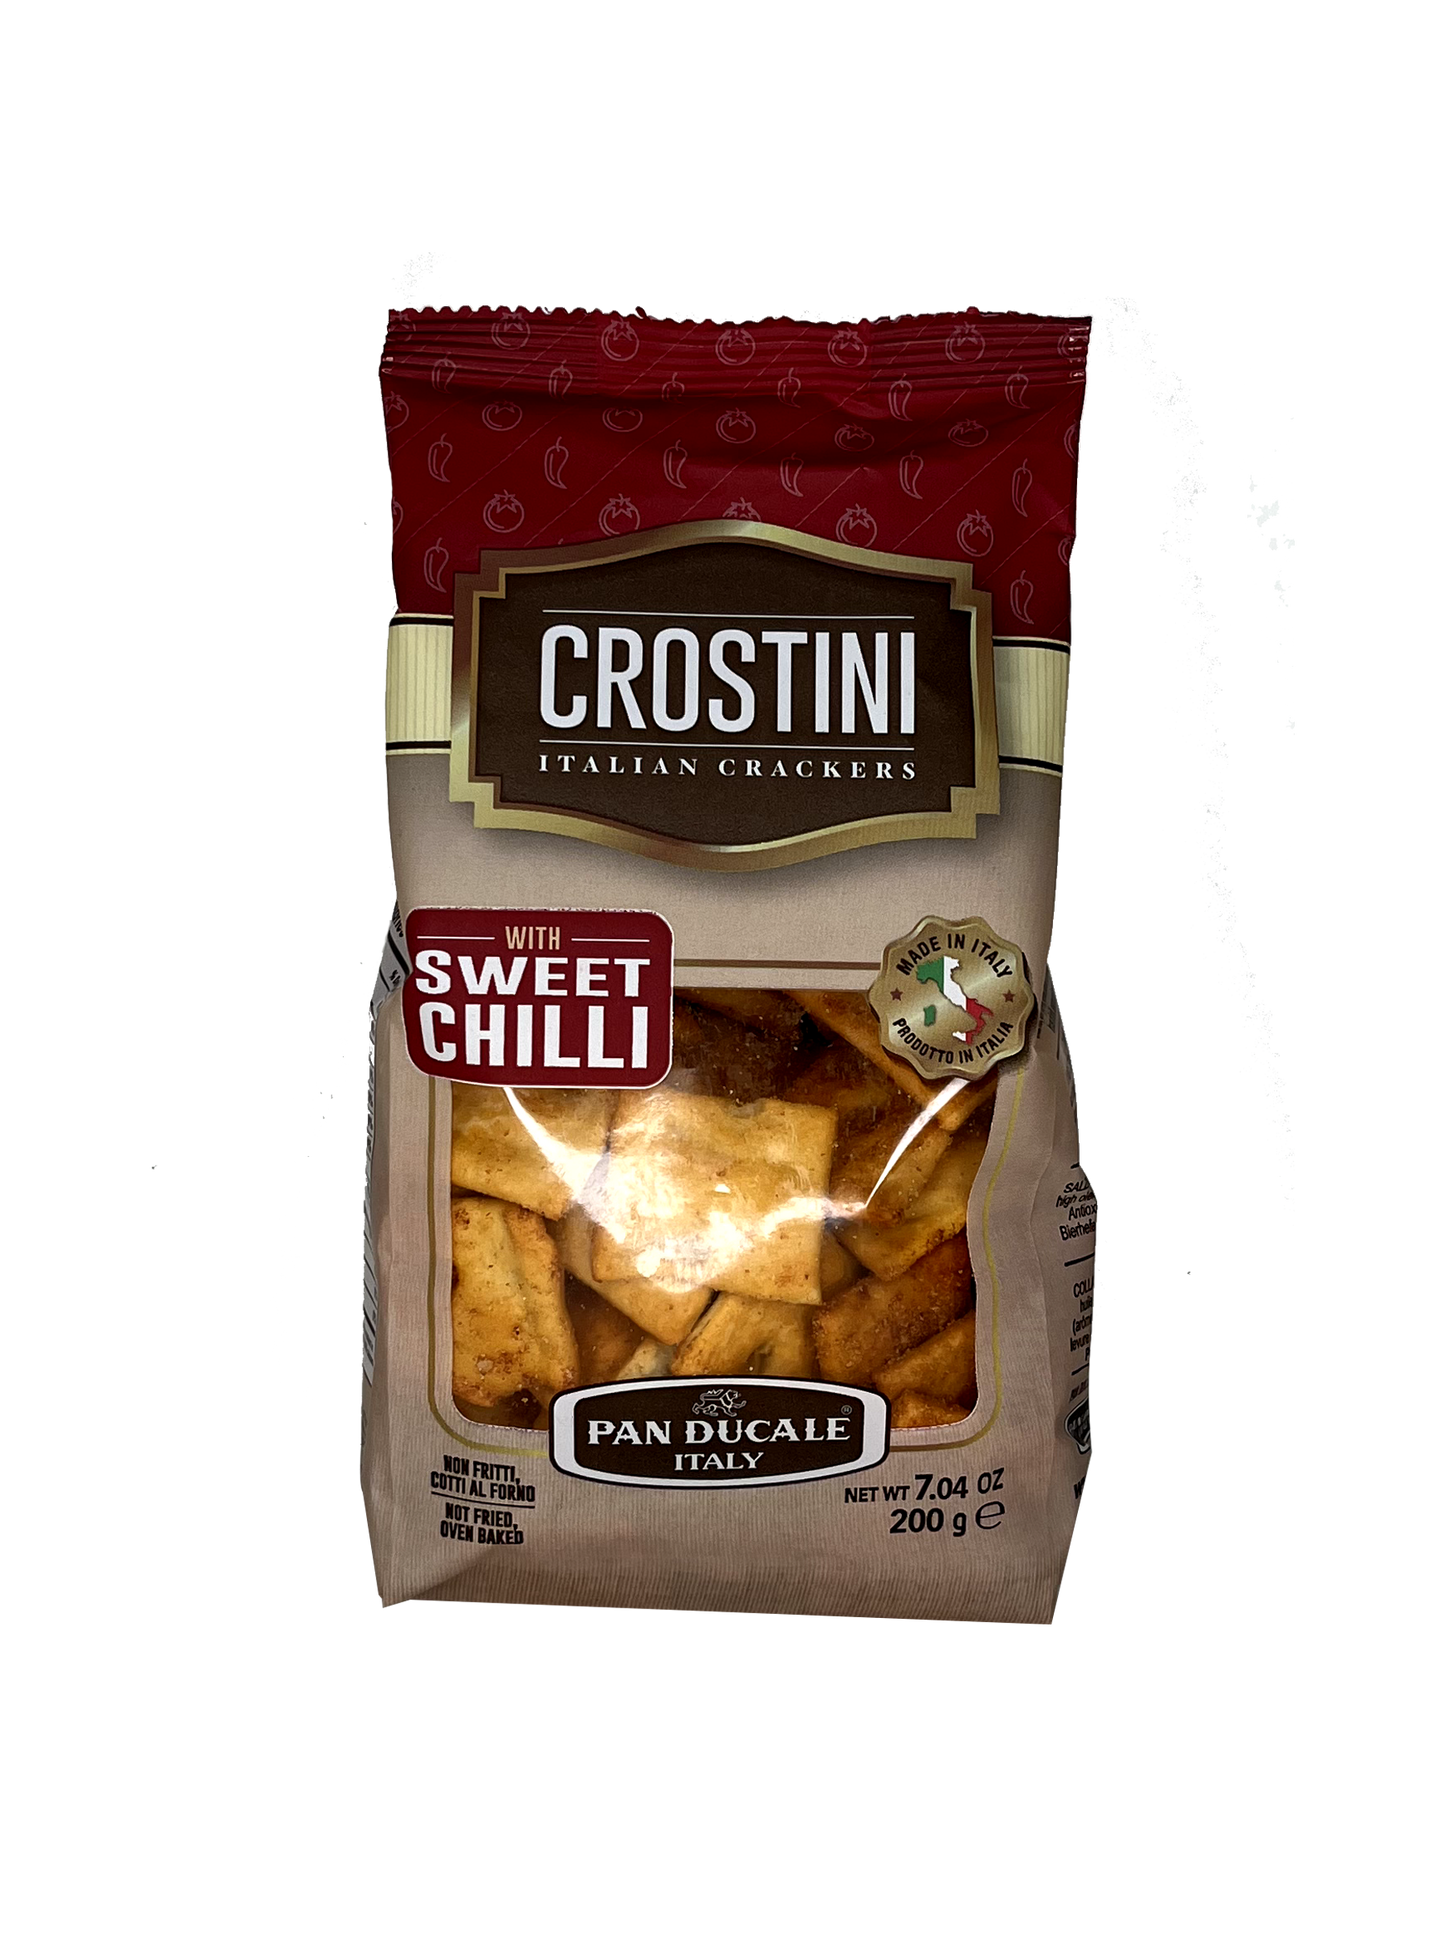 Crostini with Sweet Chilli